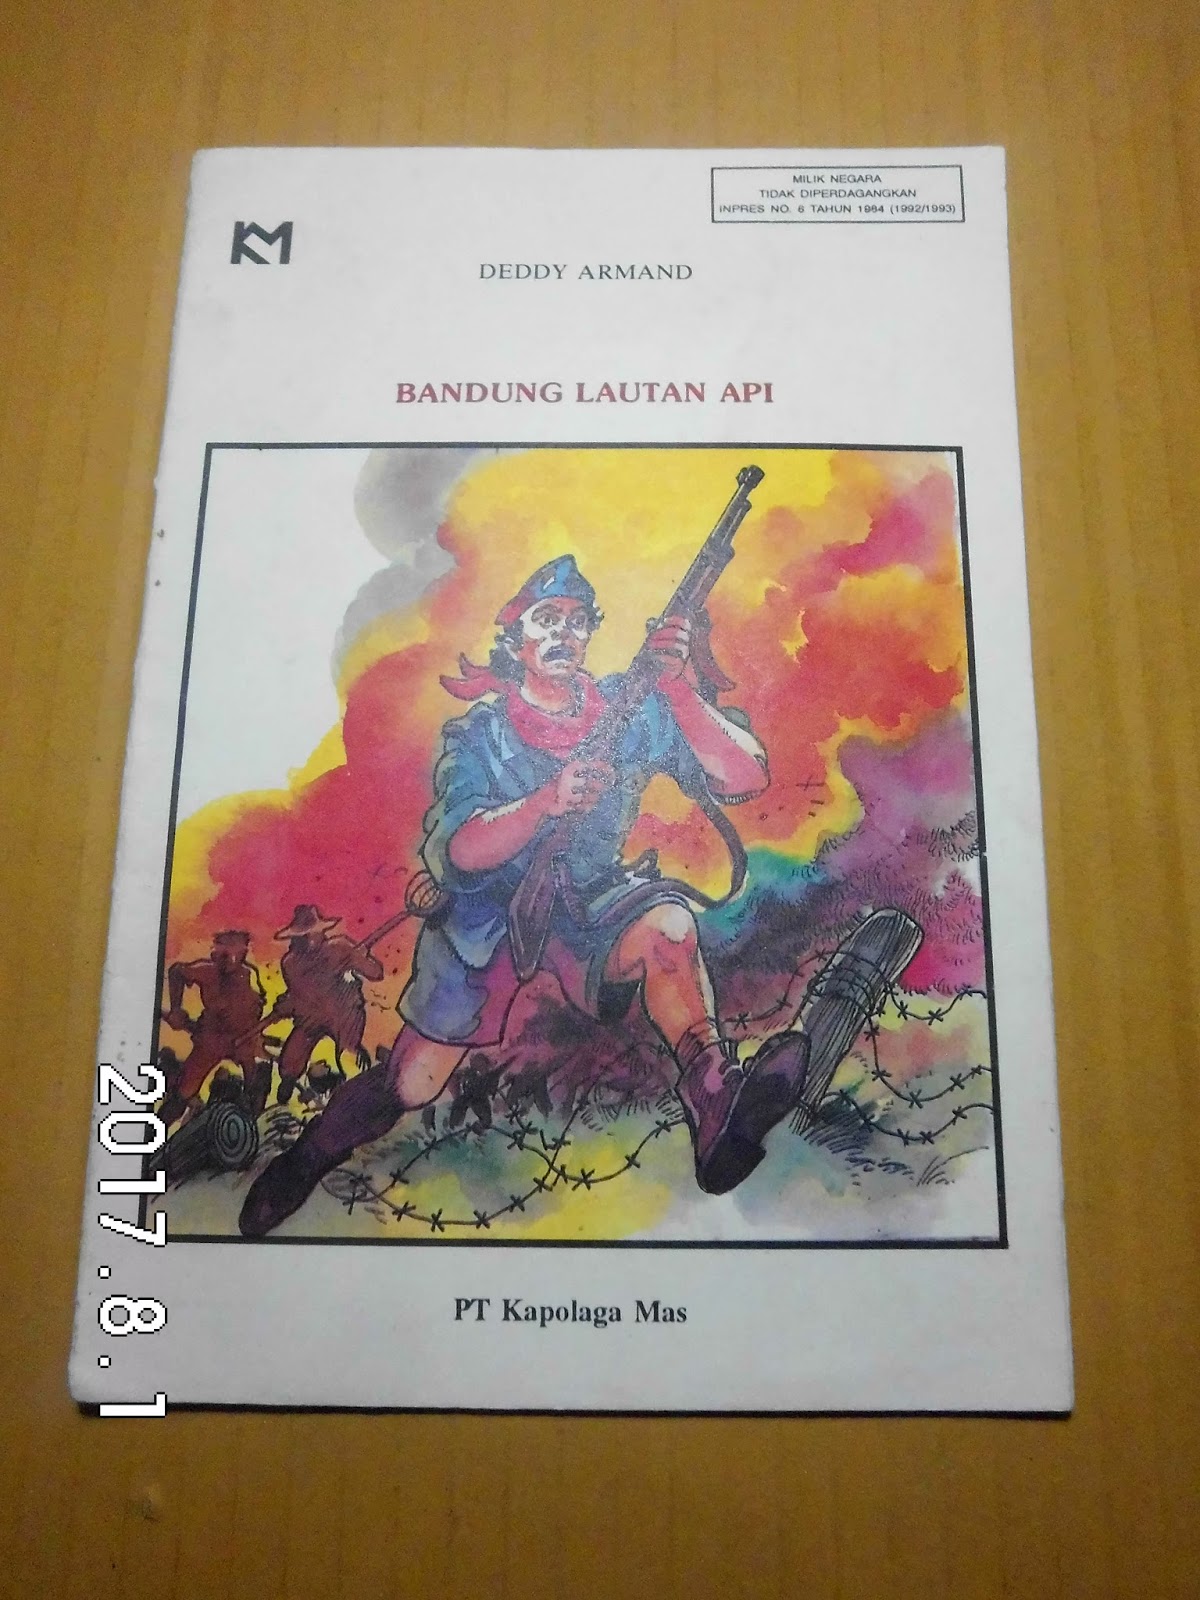 Toko Buku Bekas Online Paksrimo 2 Bandung Lautan Api Sold